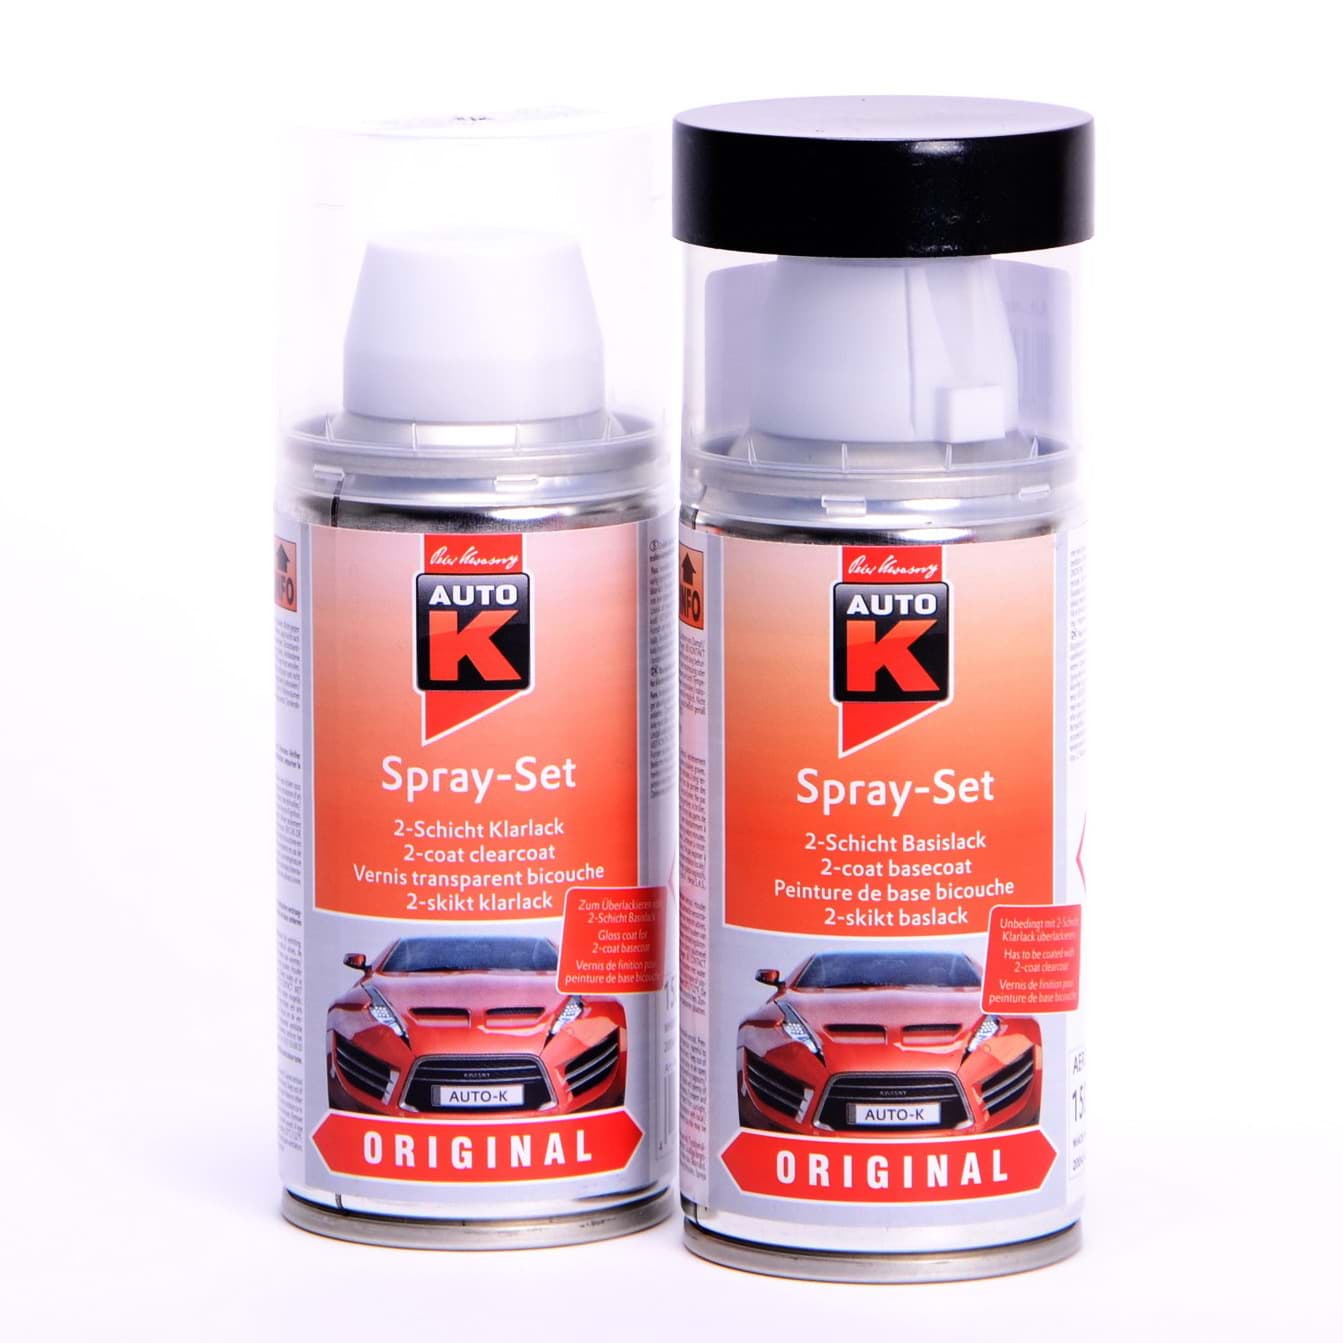 Auto-K Spray-Set Autolack für Opel 265 Techviolett met 21360 resmi